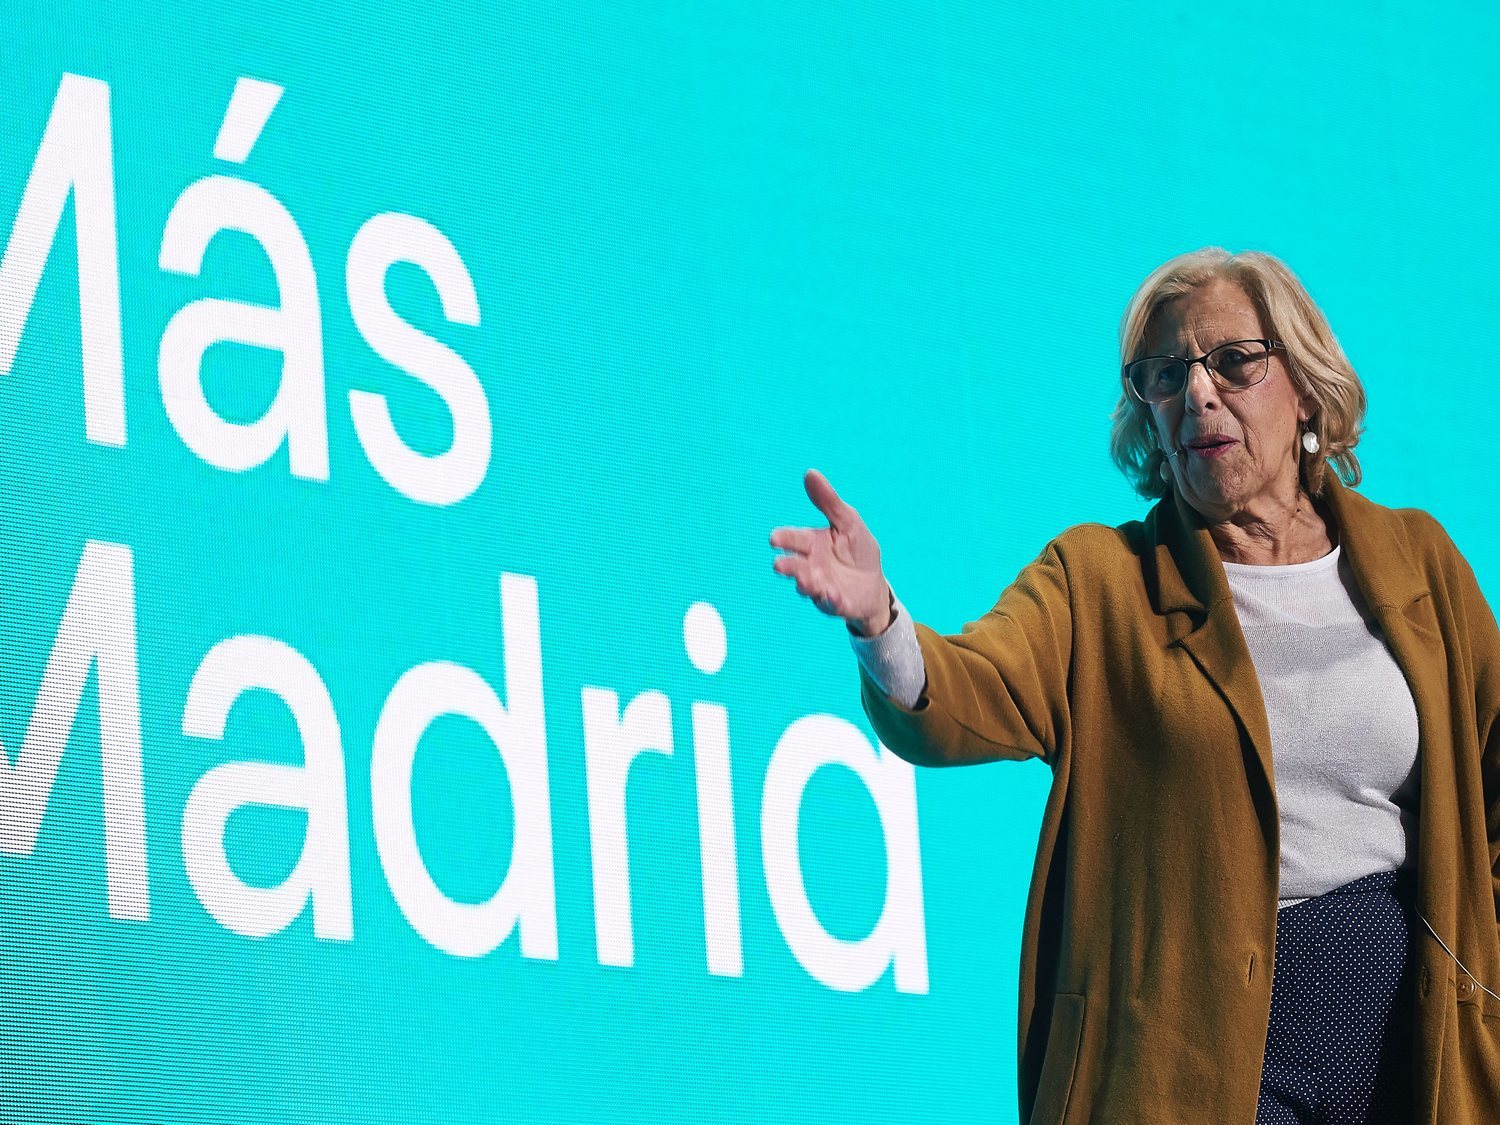 Convocan una manifestación en Cibeles para que Manuela Carmena siga de alcaldesa de Madrid